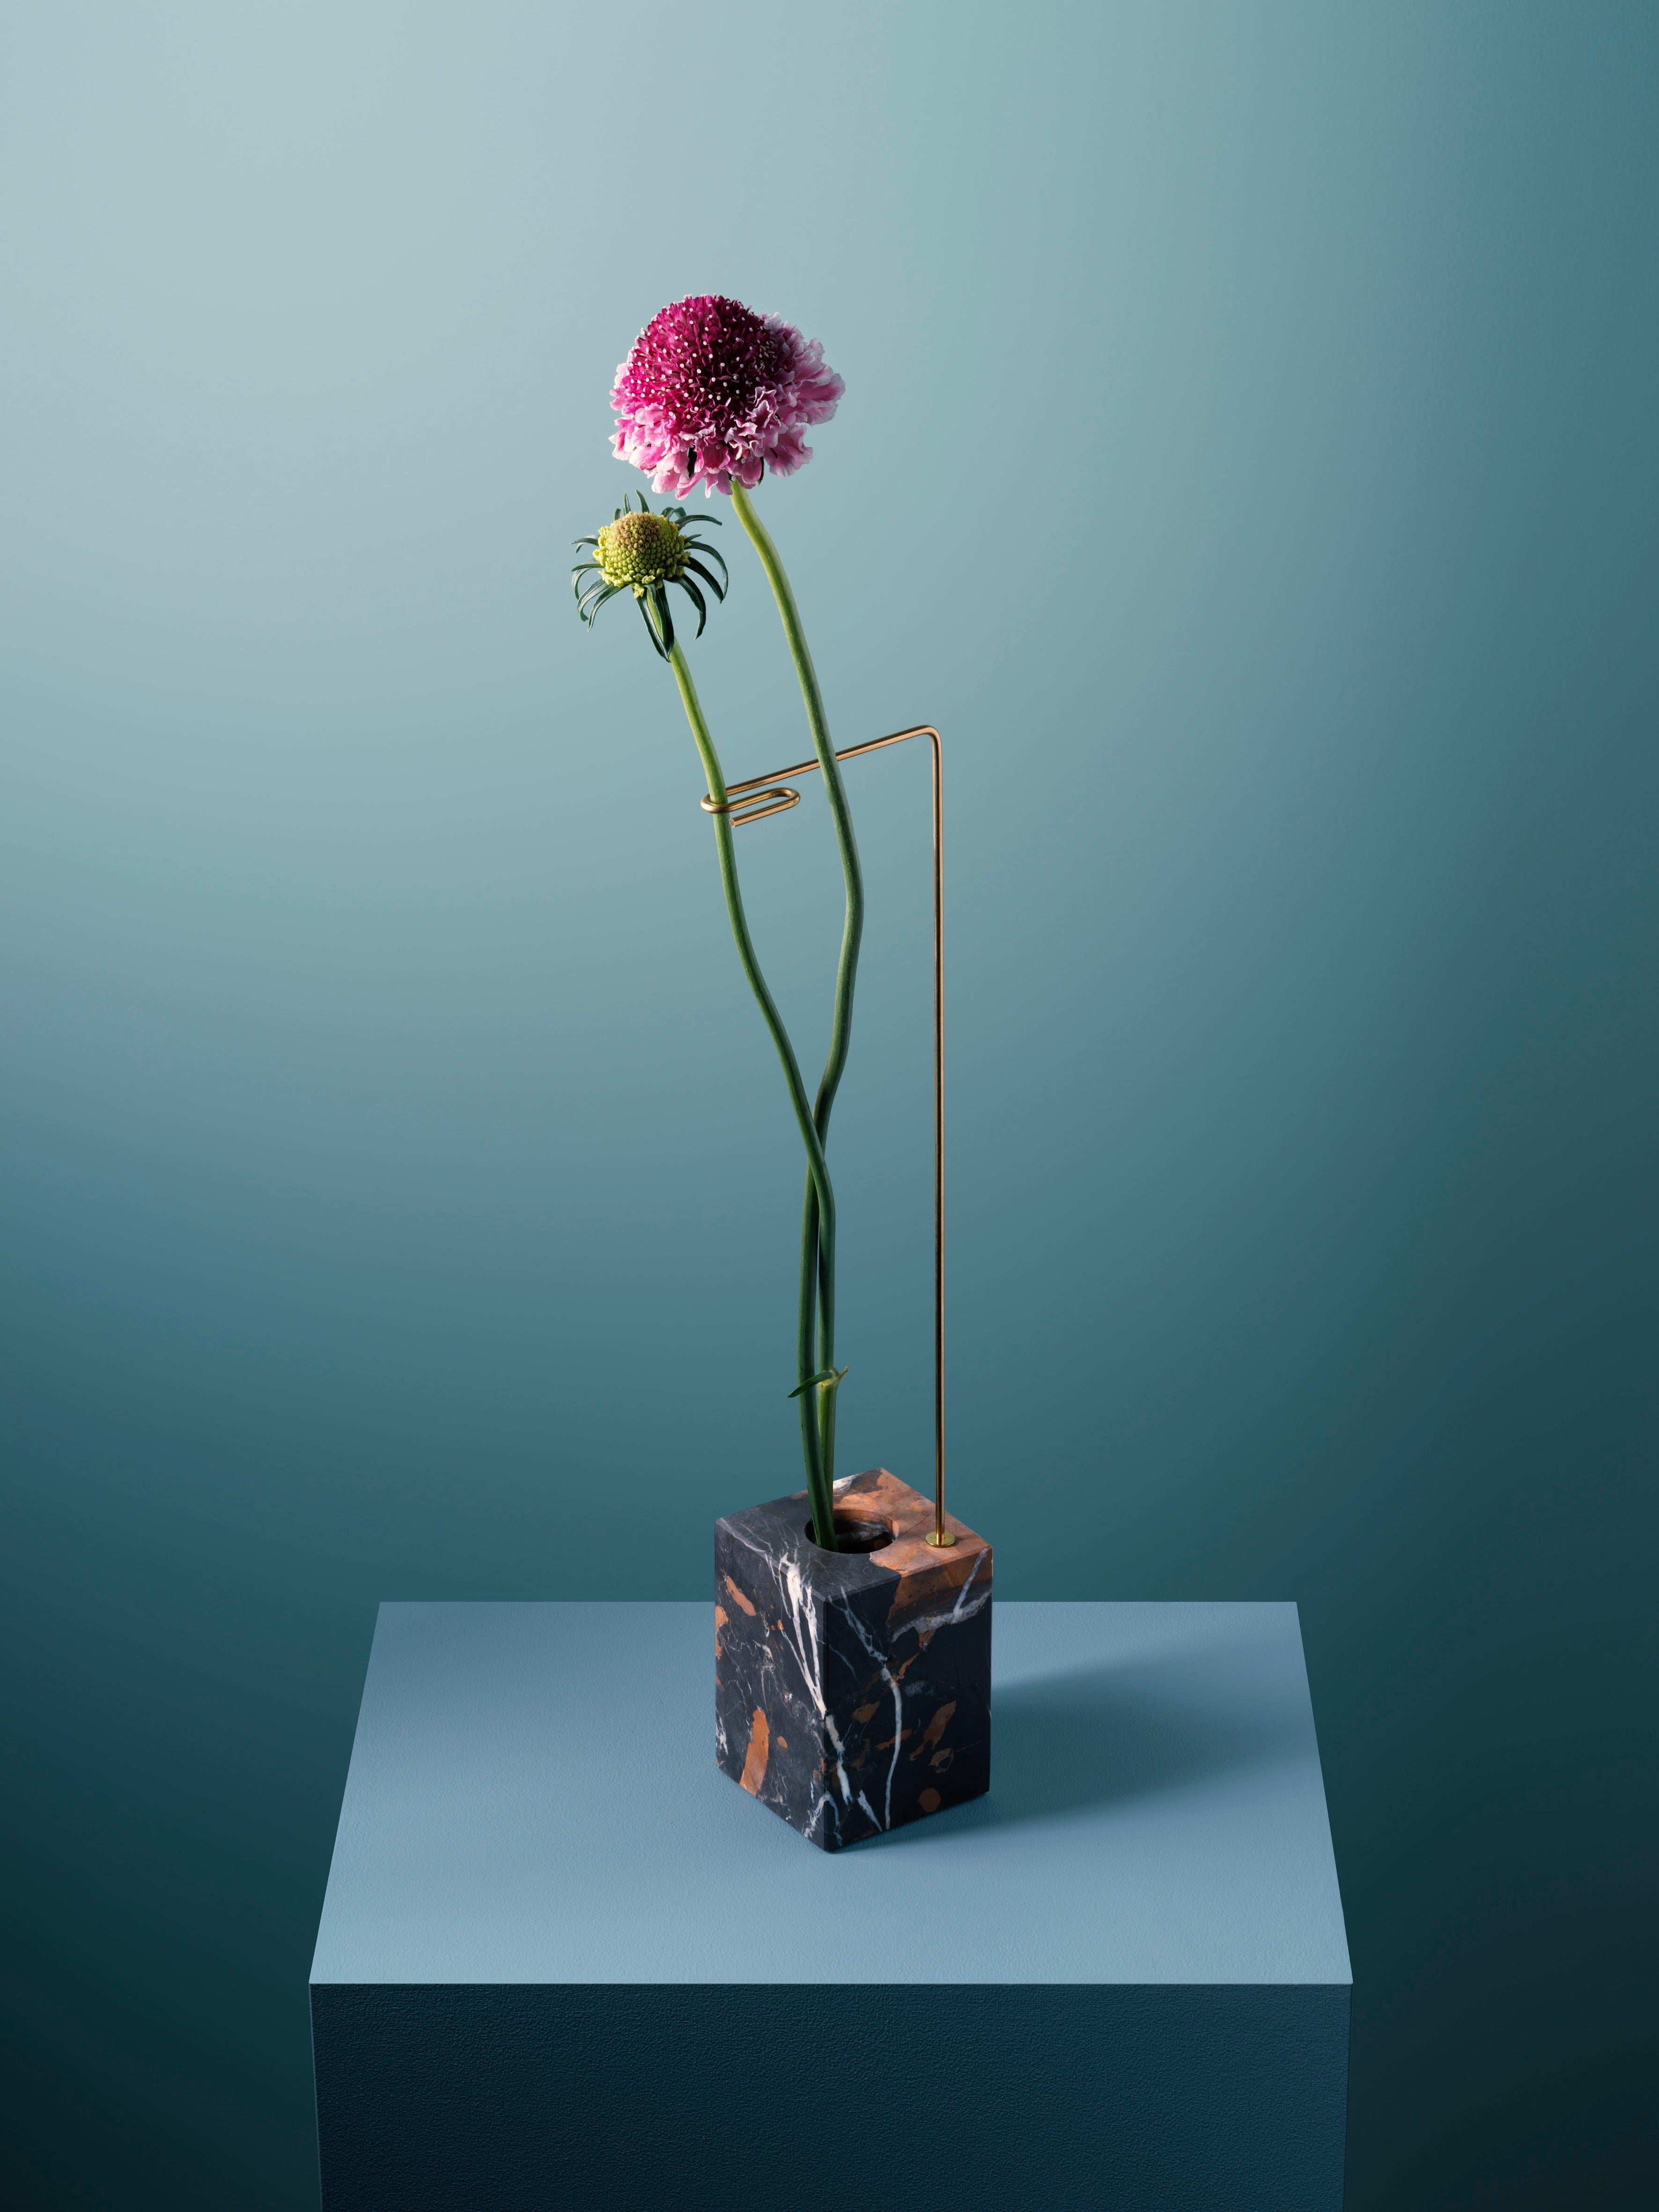 Posture marble vase - Carl Kleiner
Dimensions:
- Marble : 40 x 7 x 7 cm
- Metal : Ø3mm
Material: Africa black

Taking inspiration from photographer Carl Kleiner's 2014 series 